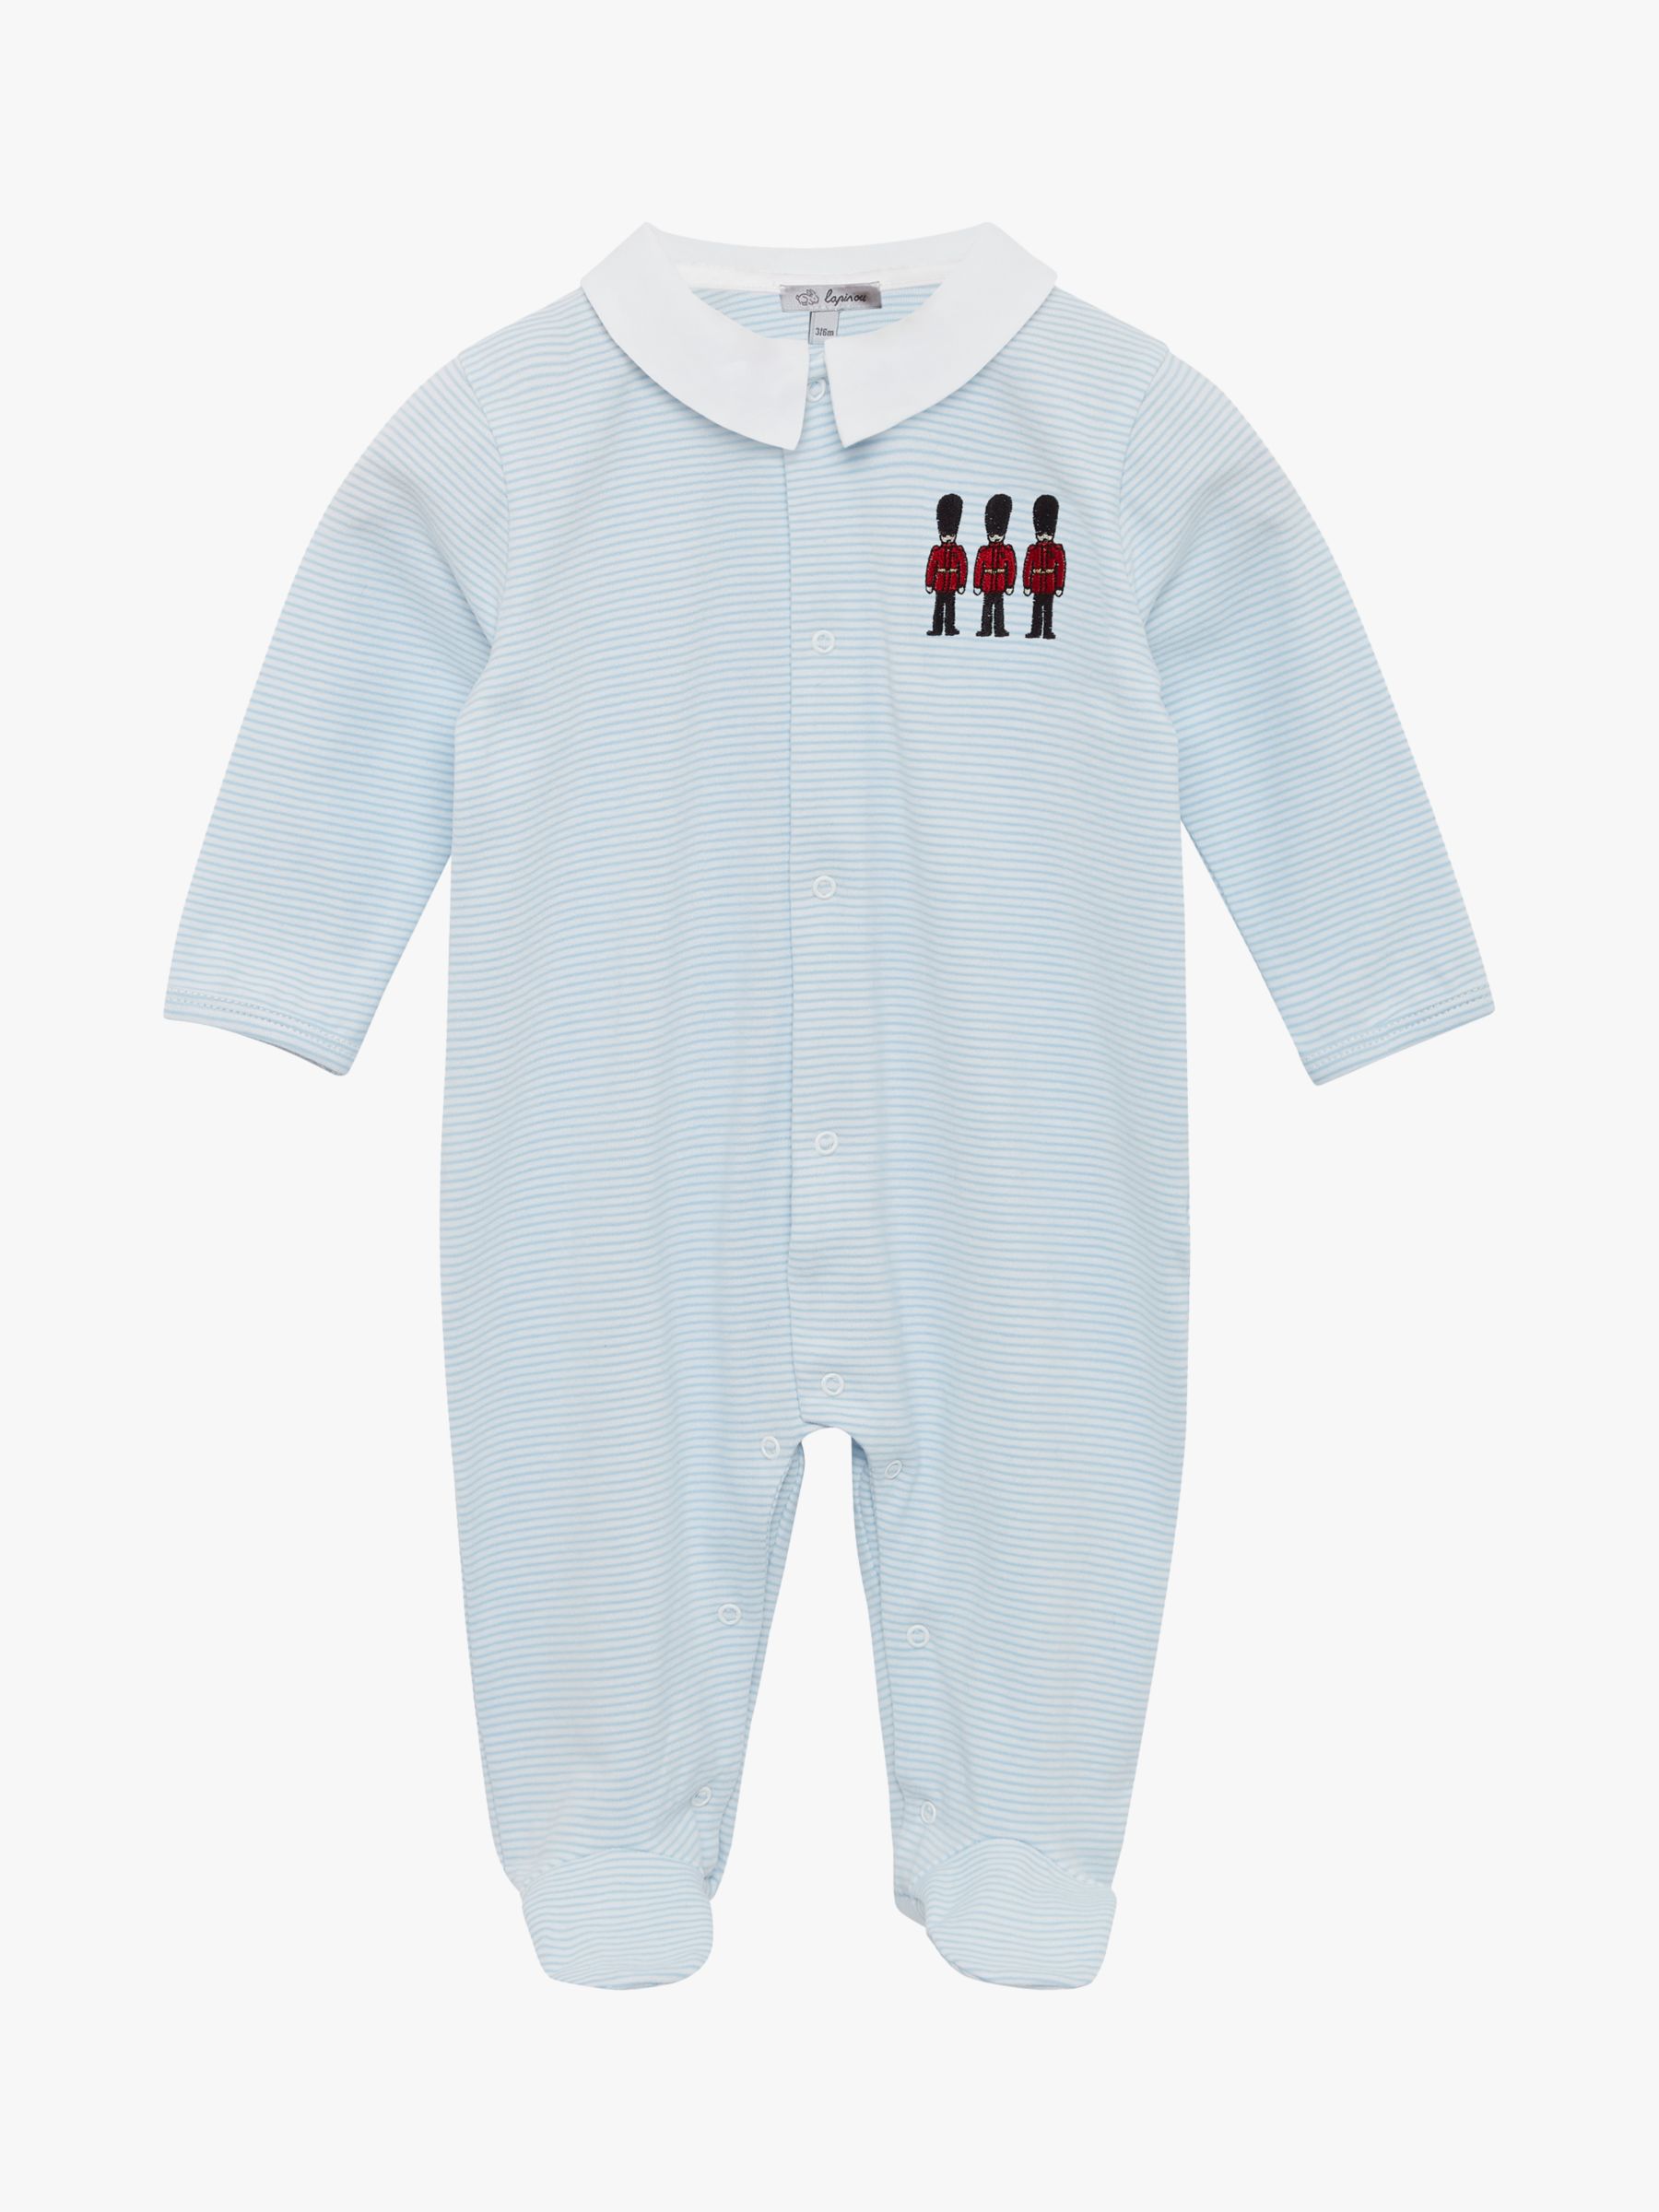 Trotters Lapinou Baby Hugo Organic Cotton Jersey Bodysuit, Pale Blue/White Stripe, Newborn